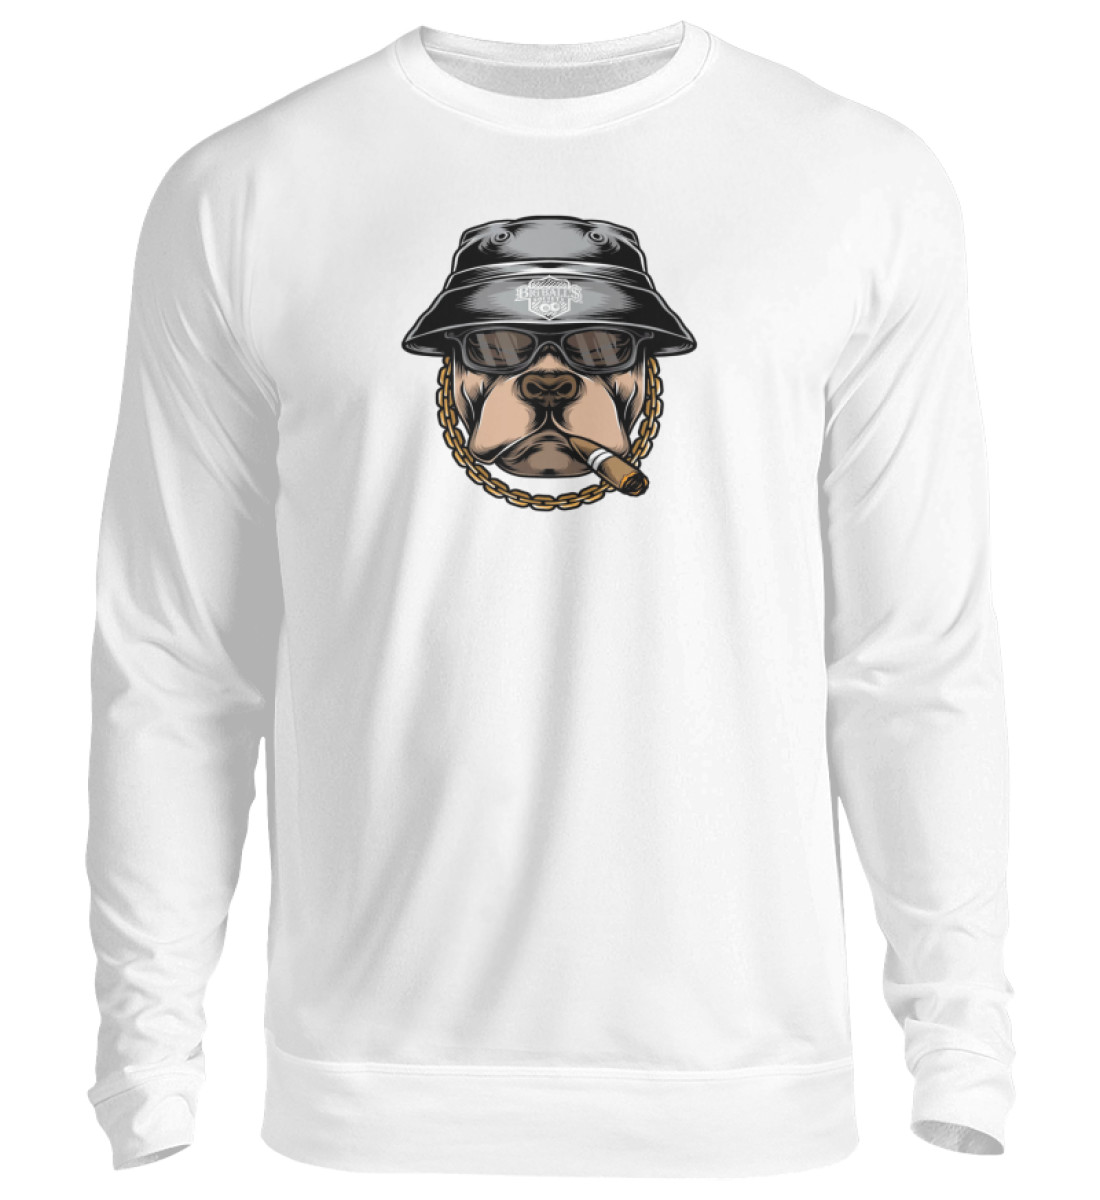 Big Ball'$ Society Bulldog limited Unisex Sweatshirt